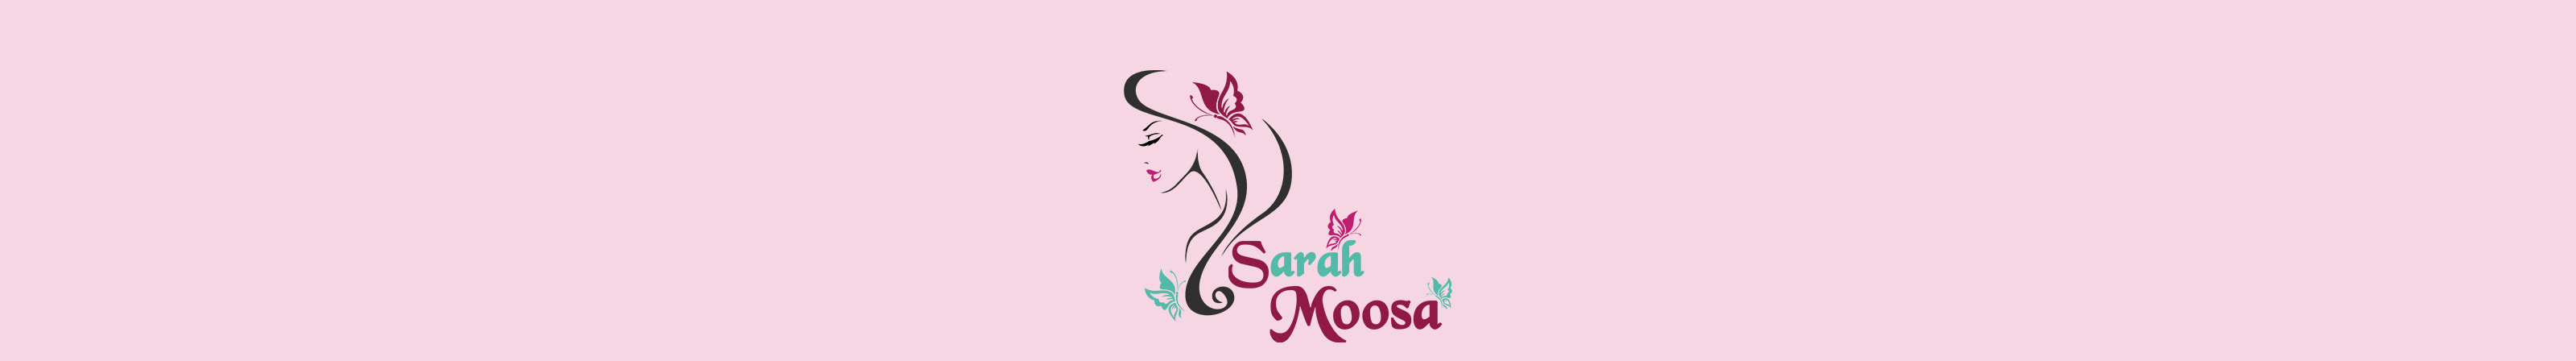 Profielbanner van sarah moosa